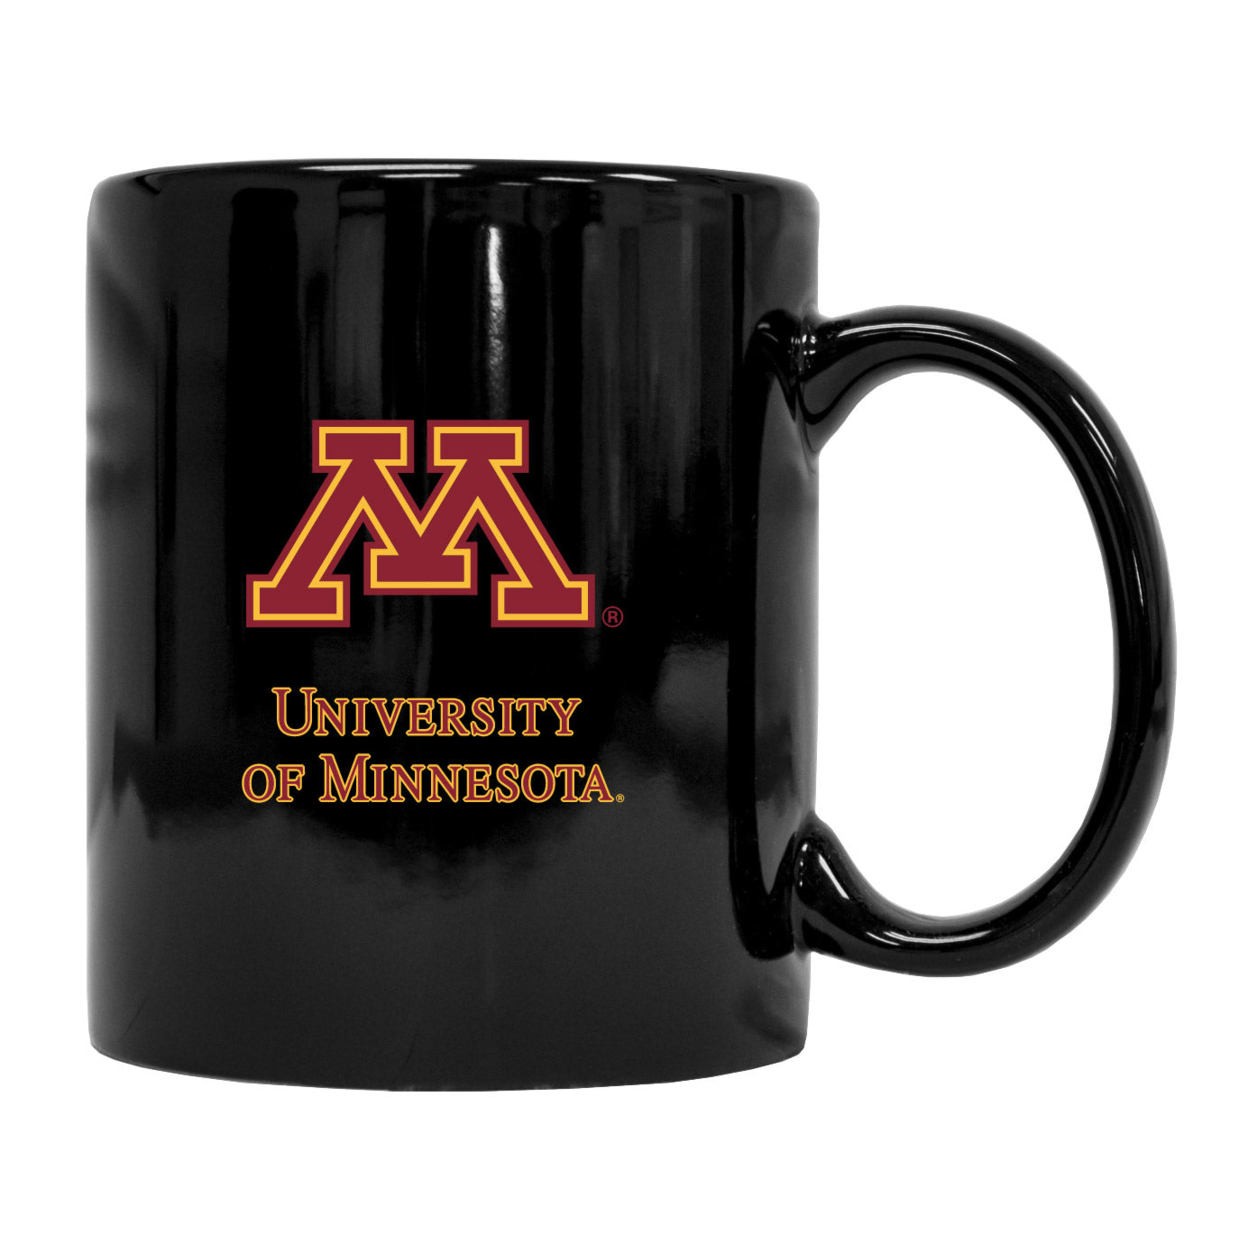 R and R Imports Minnesota Gophers Black Ceramic Coffee NCAA Fan Mug 2-Pack (Black)